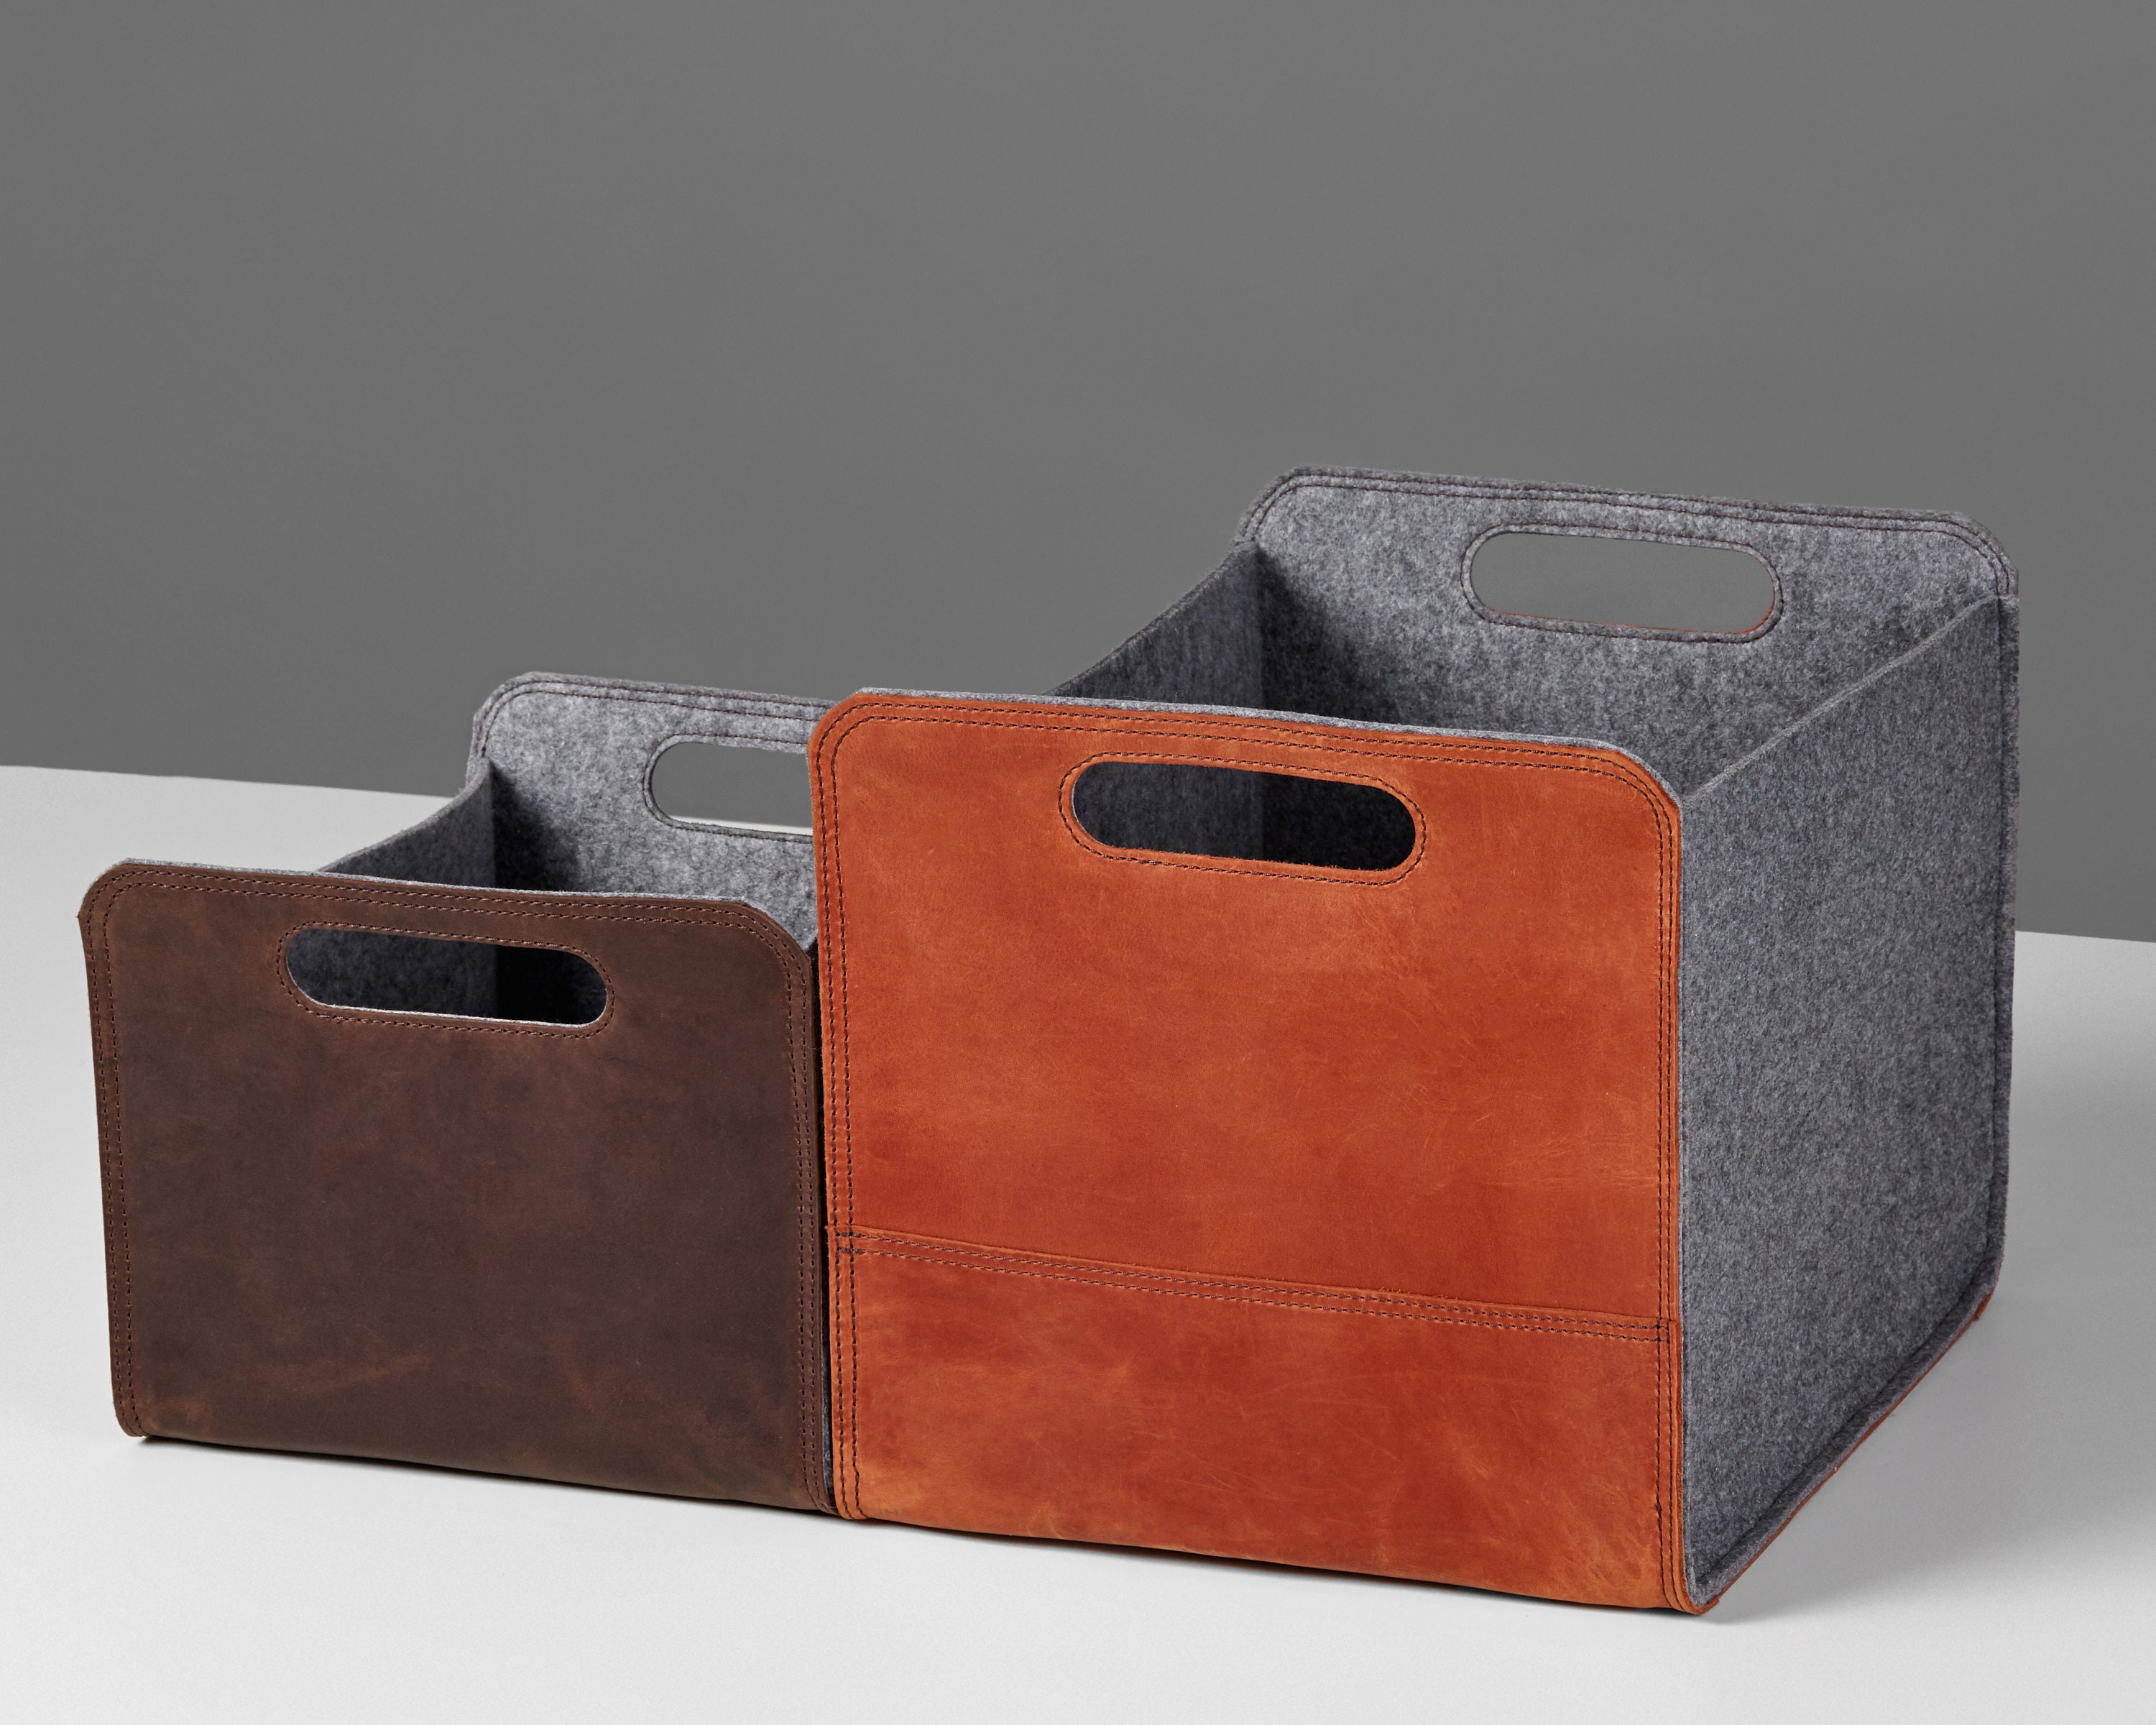 Set of 3 Felt Storage Baskets with Handles (S, M & L) – Bins & Things